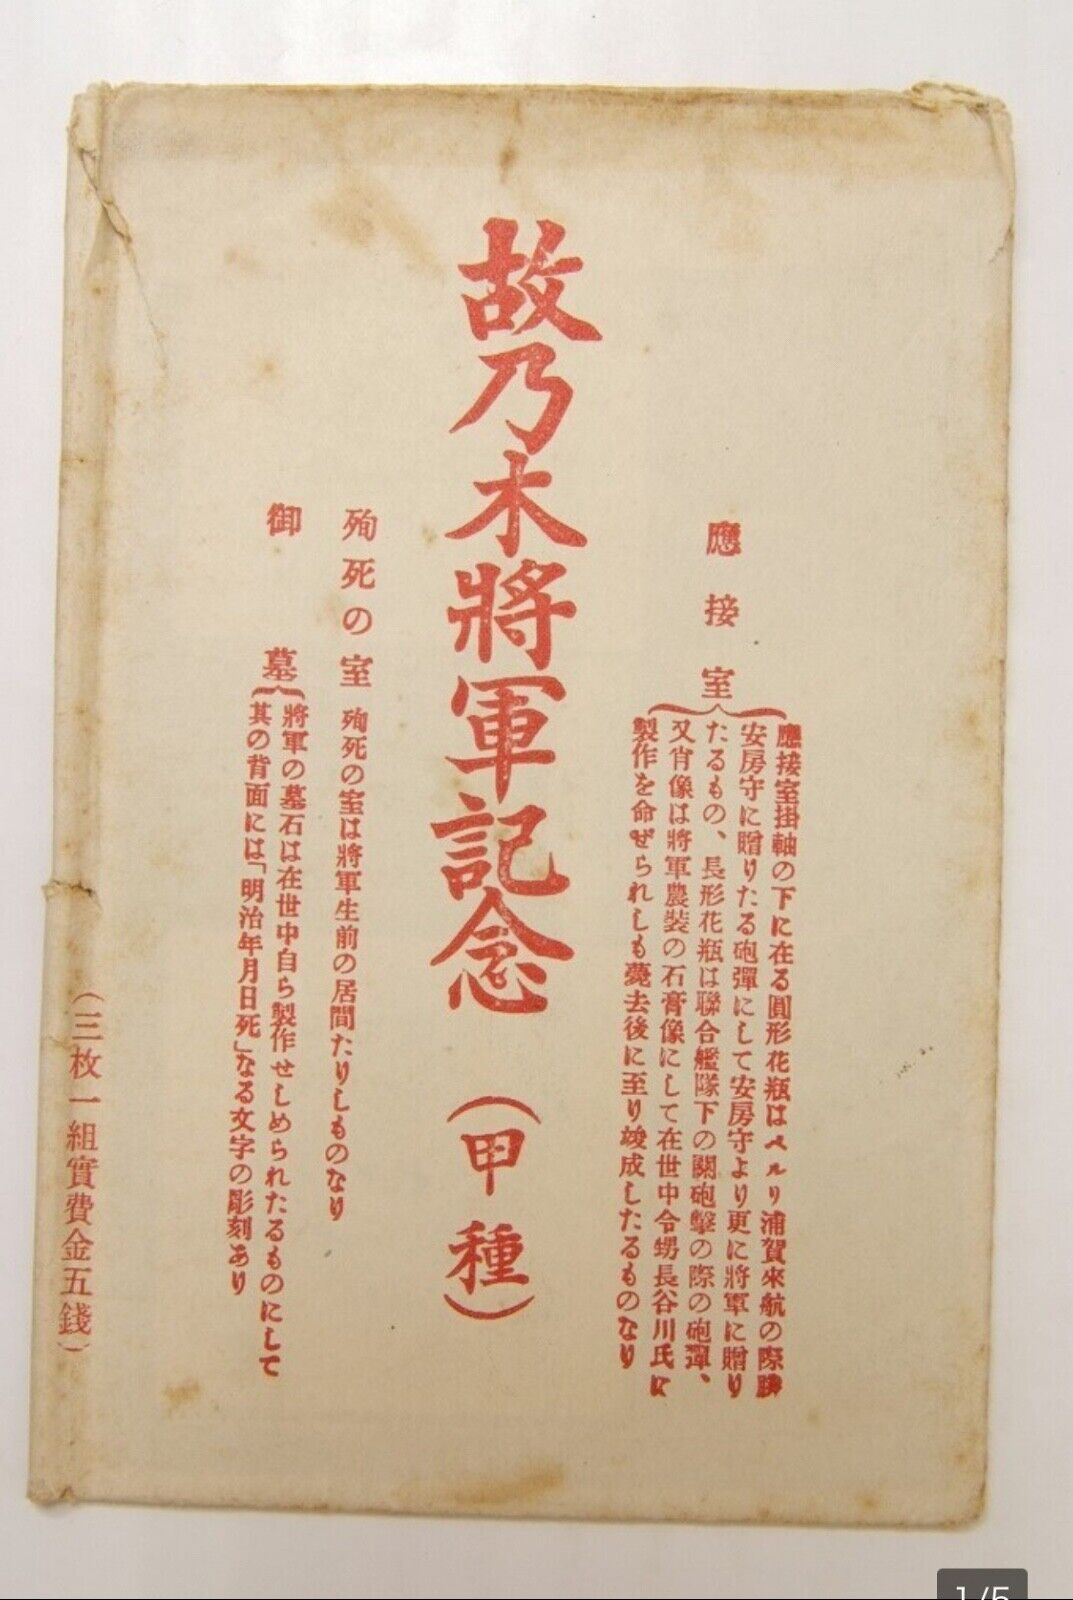 Antique Imperial Japanese Army General Nogi Maresuke Tribute Postcards, 1913